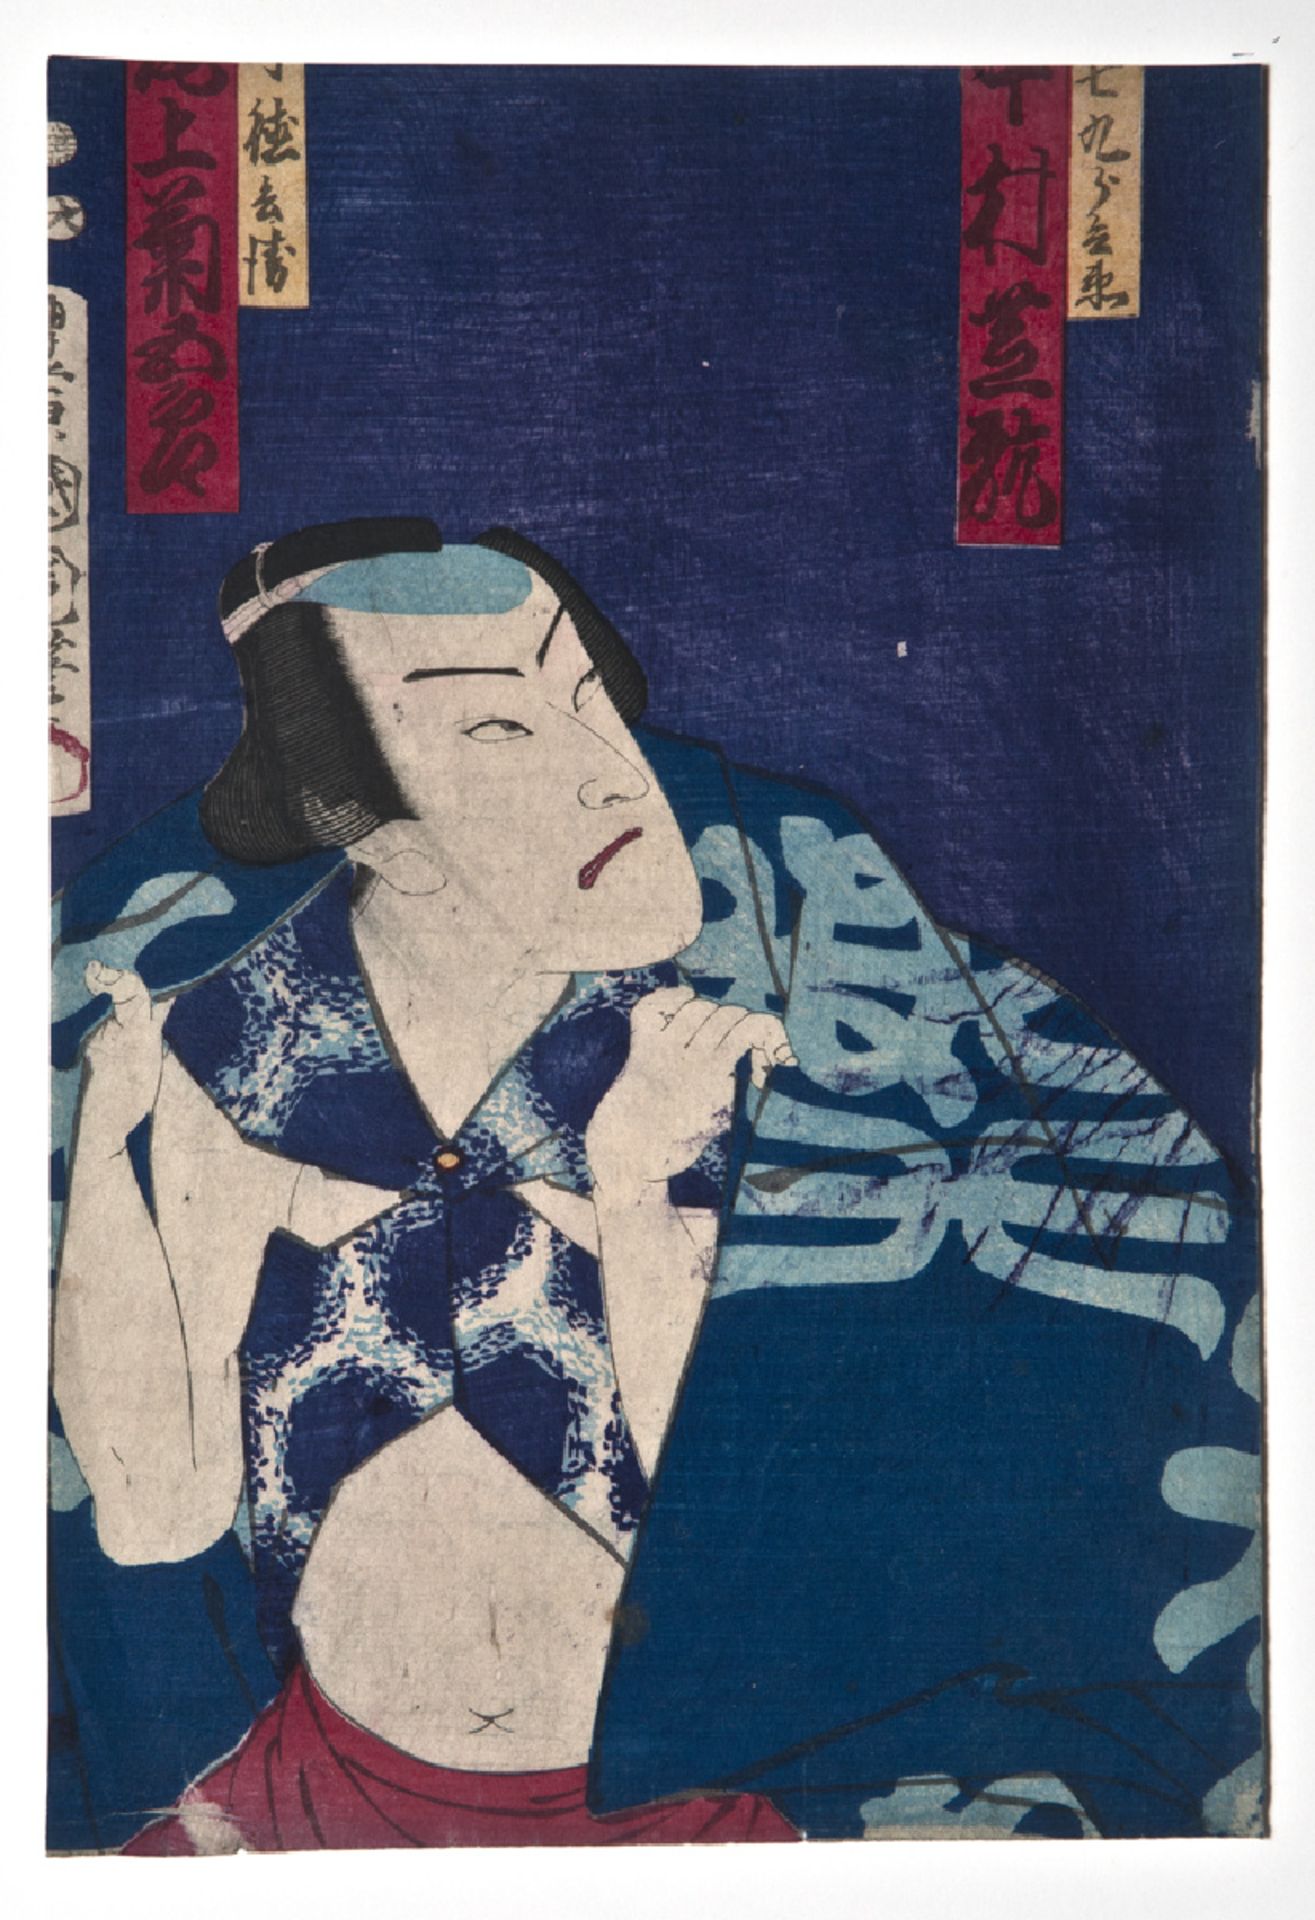 TOYOHARA KUNICHIKA (1835 - 1900)  Original woodblock print. Japan, 1860s  The famous Kabuki actor